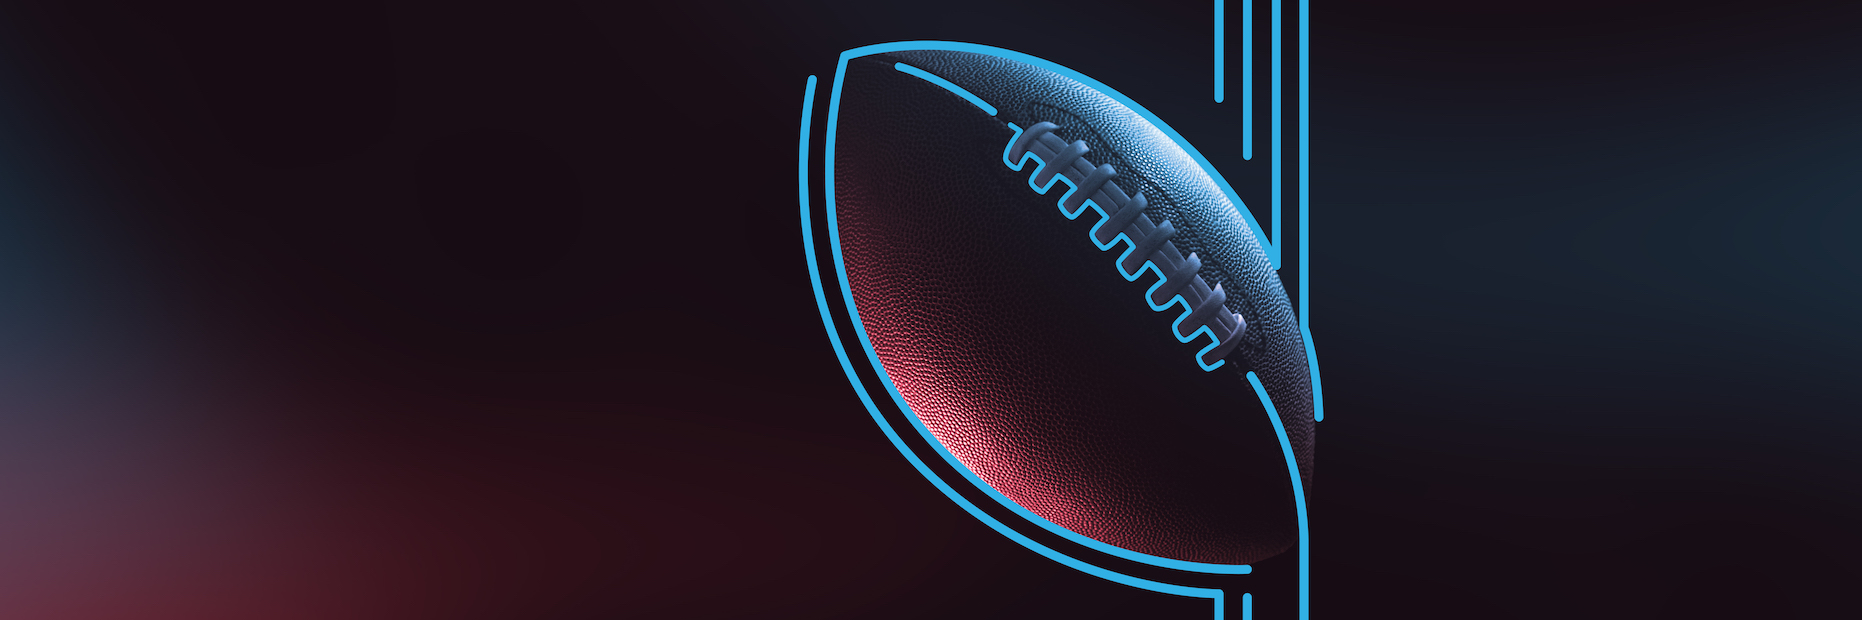 Brand Bowl 2021 Ad Tracker: DoorDash